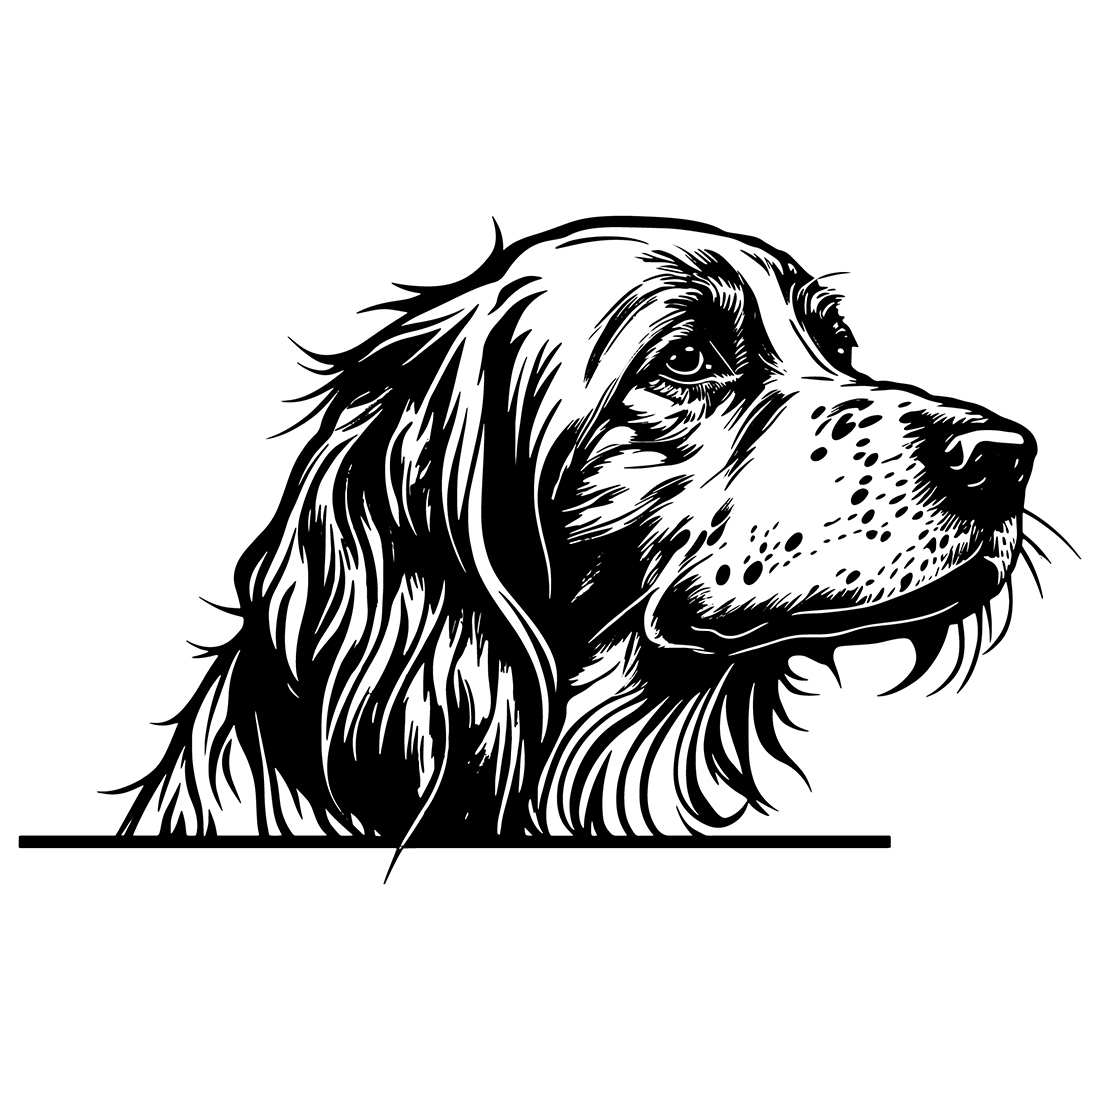 A beautiful dog logo illustration cover image.